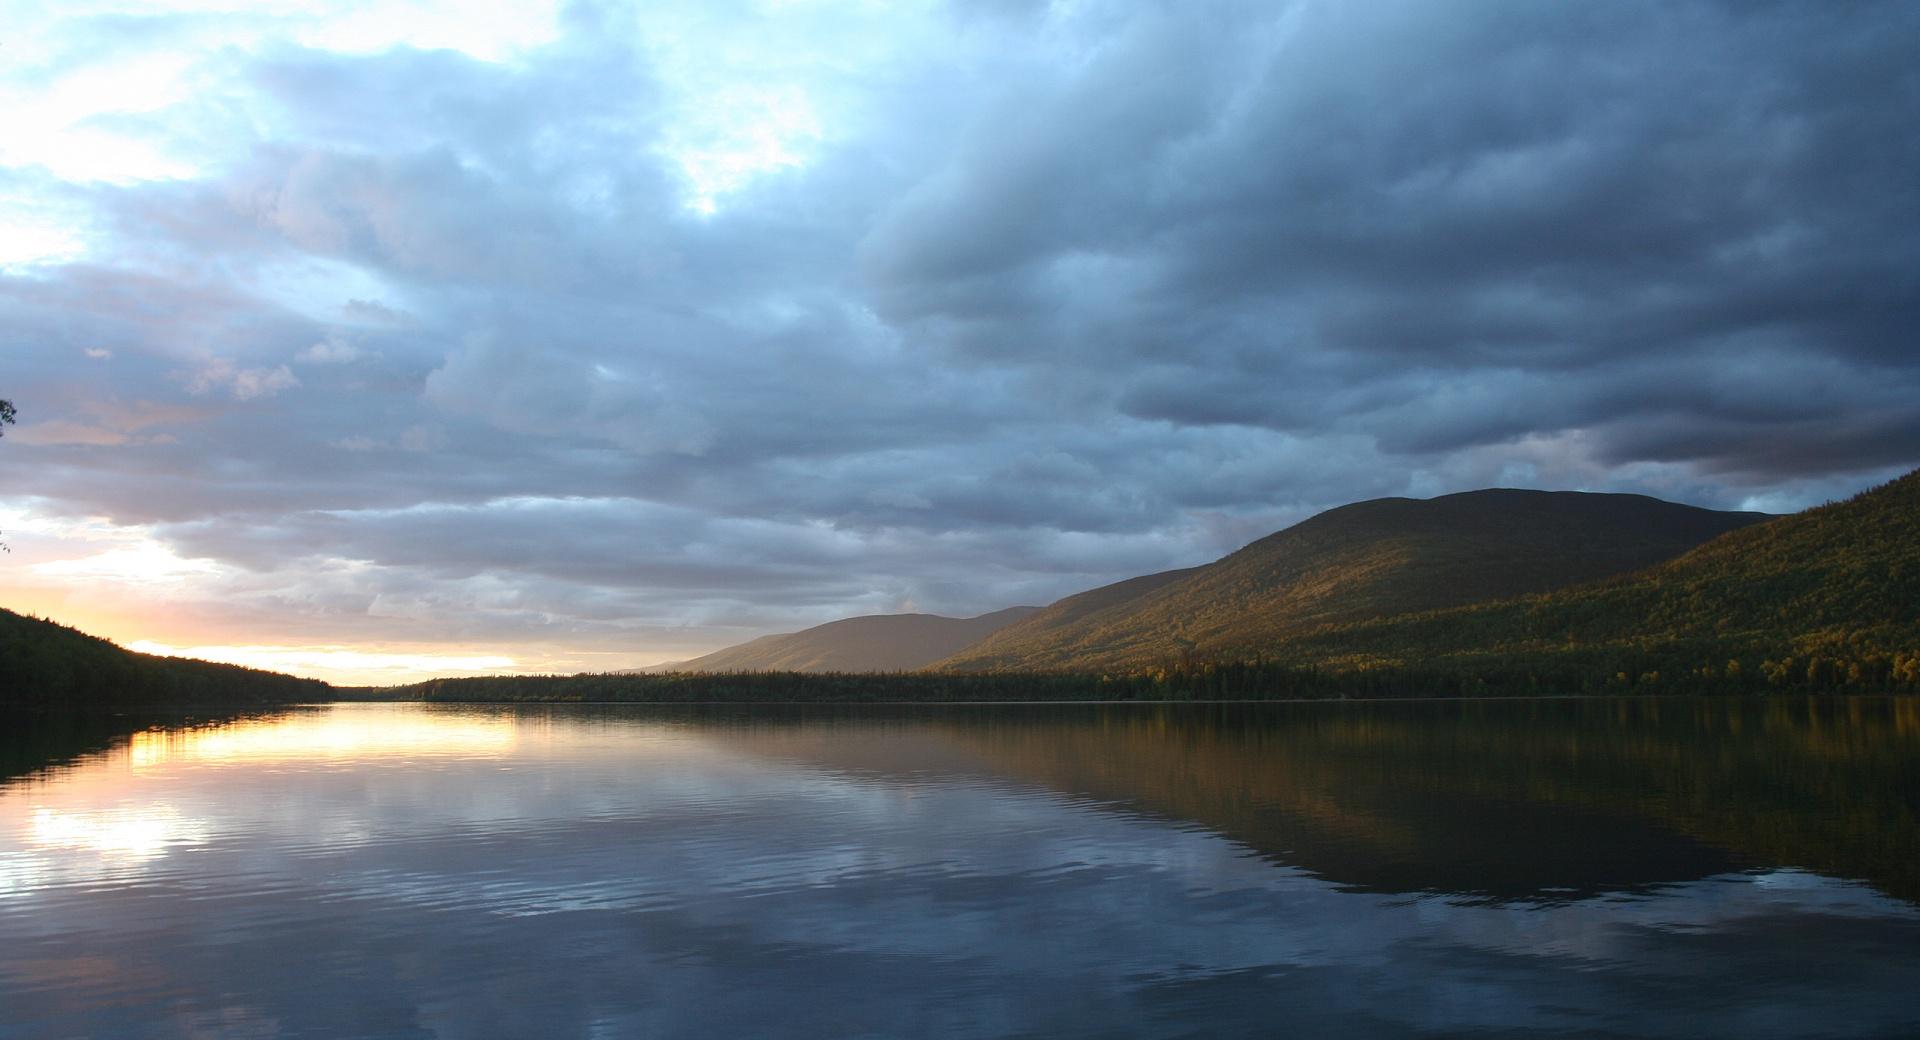 Morfee Lake, Mackenzie, British Columbia, Canada at 1600 x 1200 size wallpapers HD quality